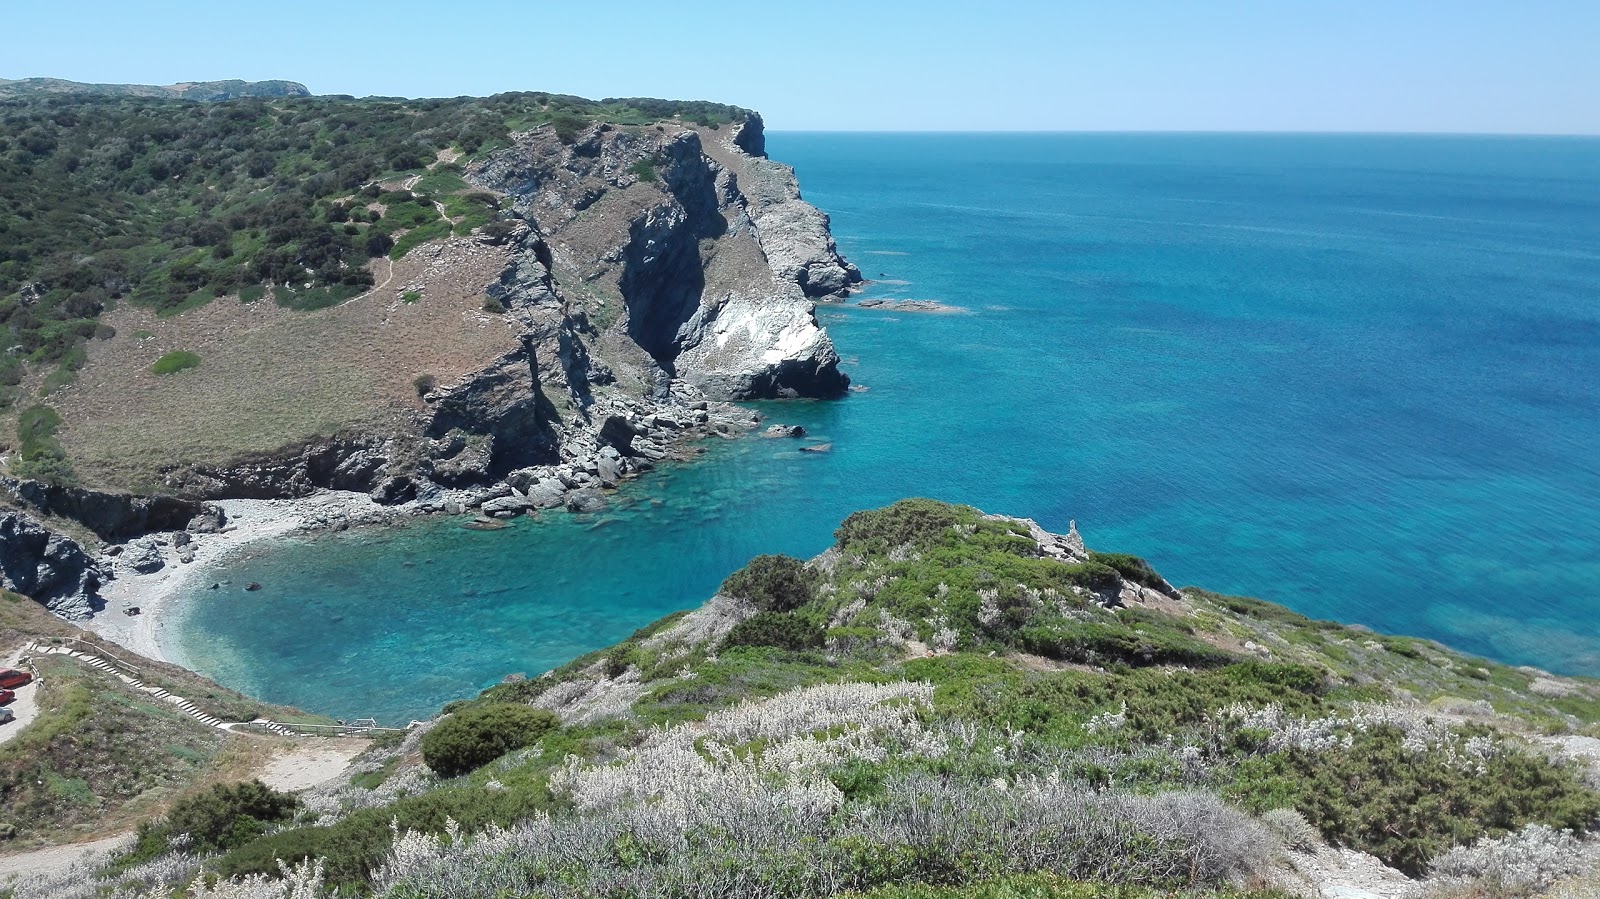 Photo of Spiaggia di Lampianu with small bay